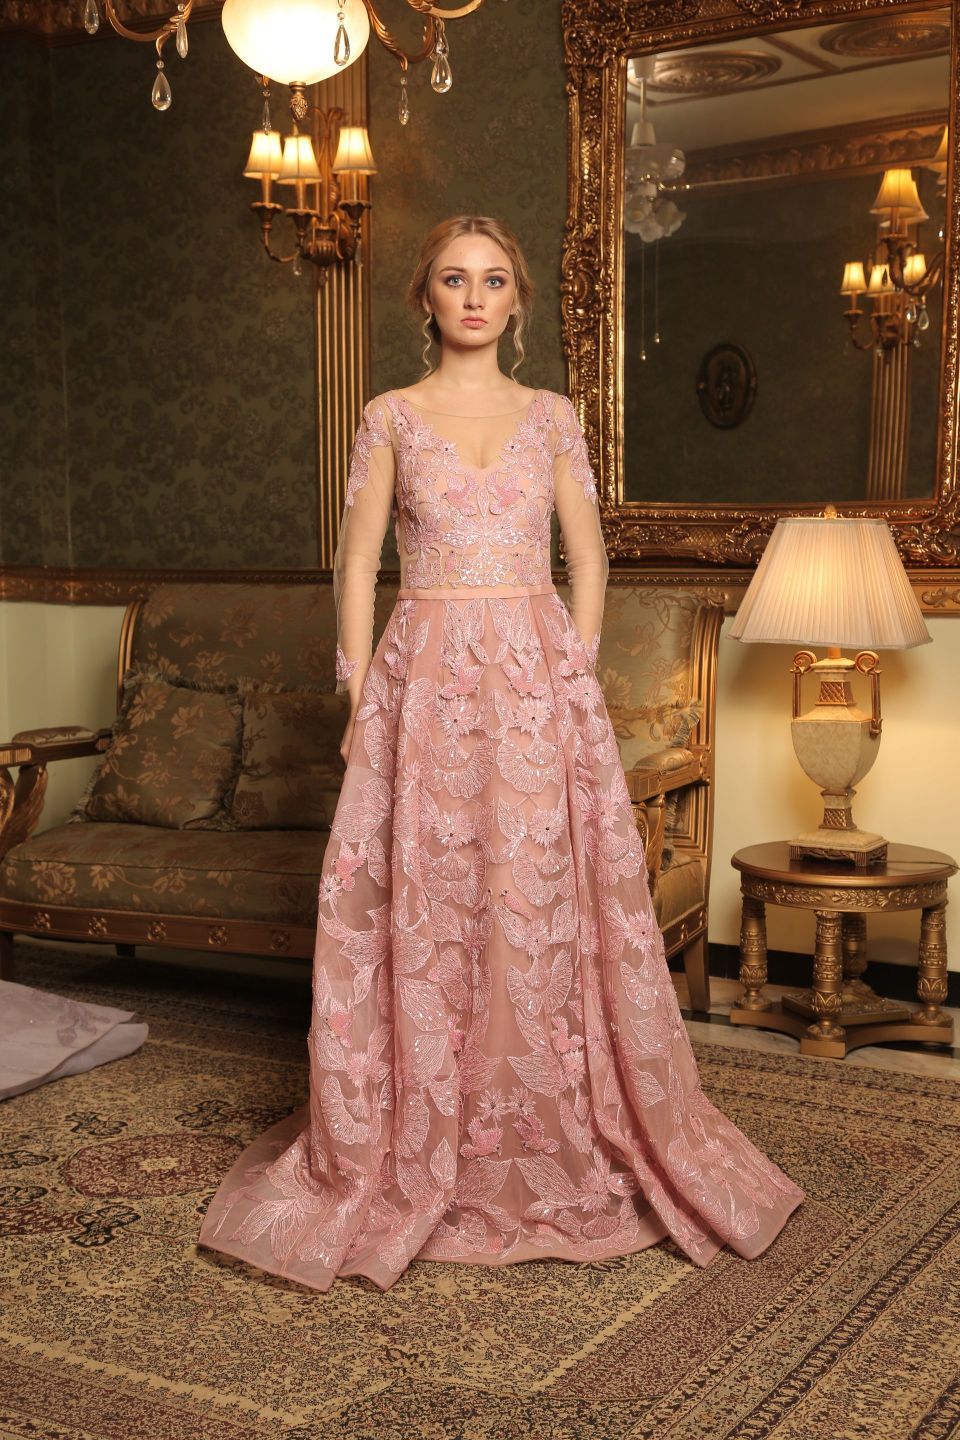 Amit GT - Pink hand embroidered rosamund gown